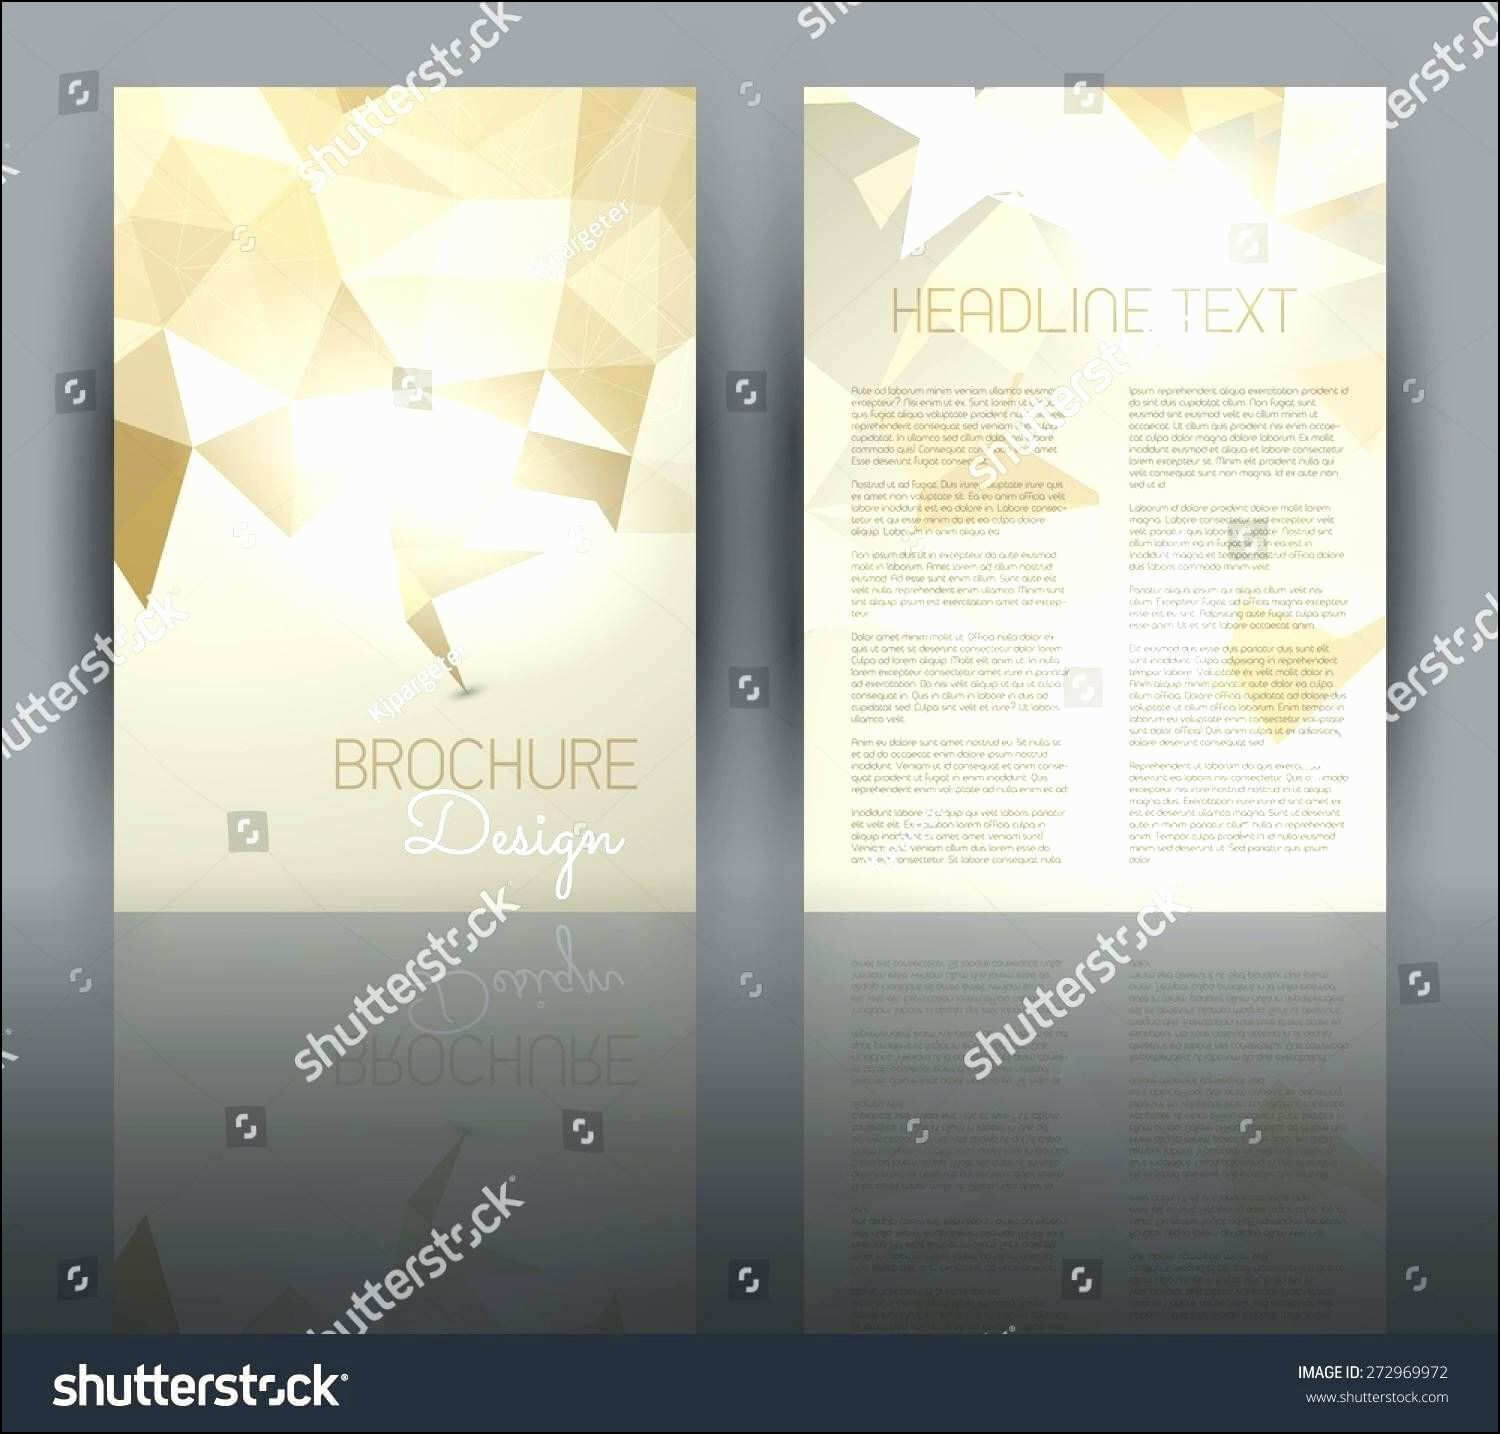 Fresh 25 Double Sided Tri Fold Brochure Template With Regard To Double Sided Tri Fold Brochure Template